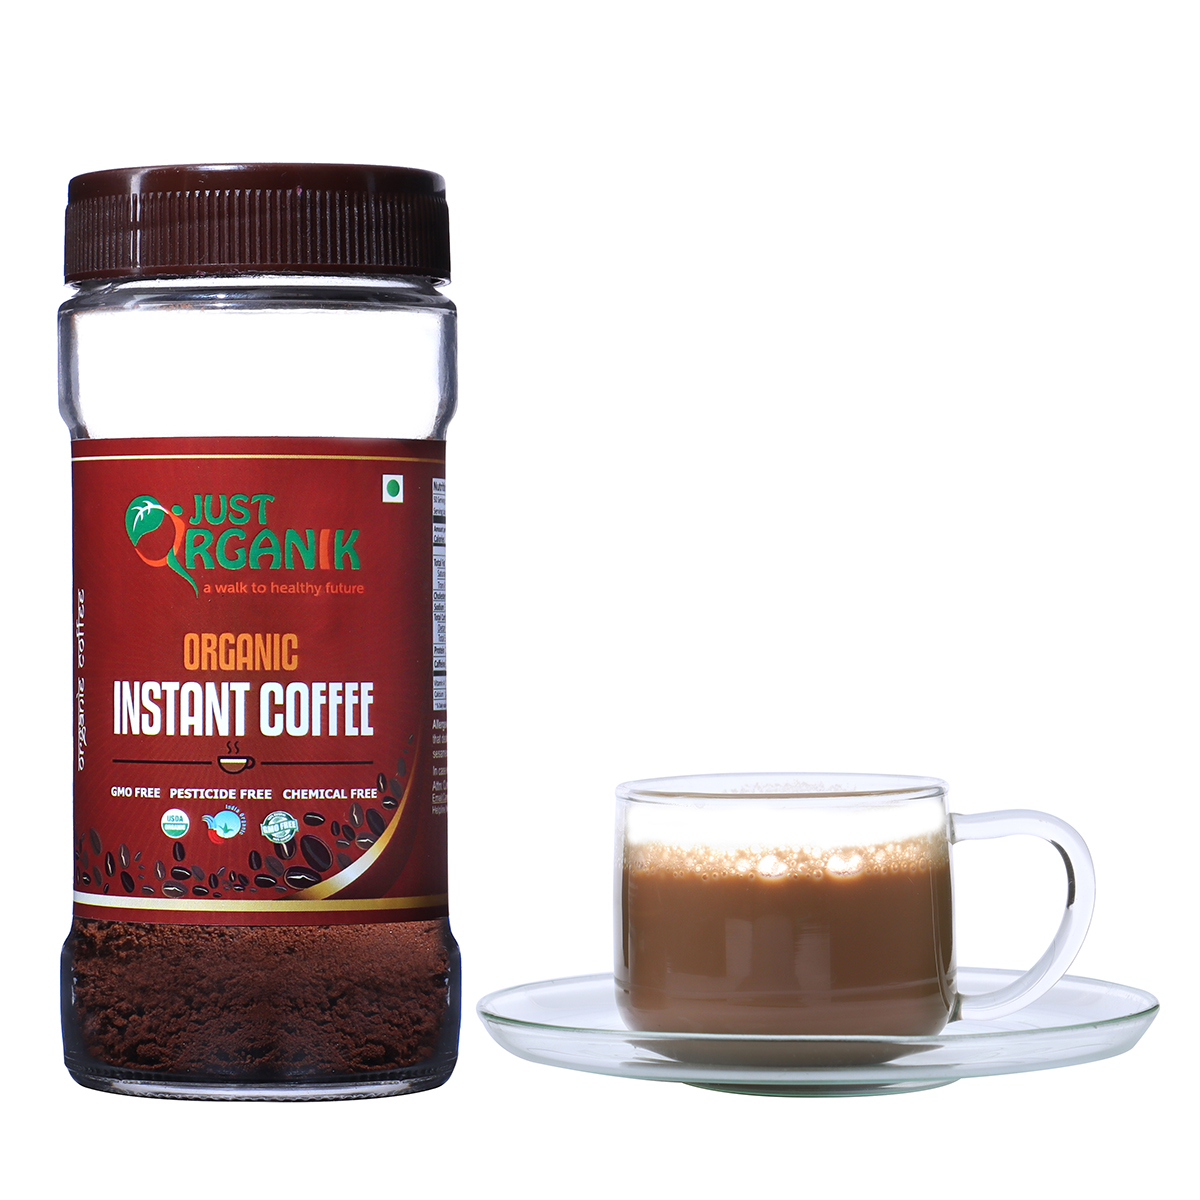 Just Organik Organic Instant Coffee 100g